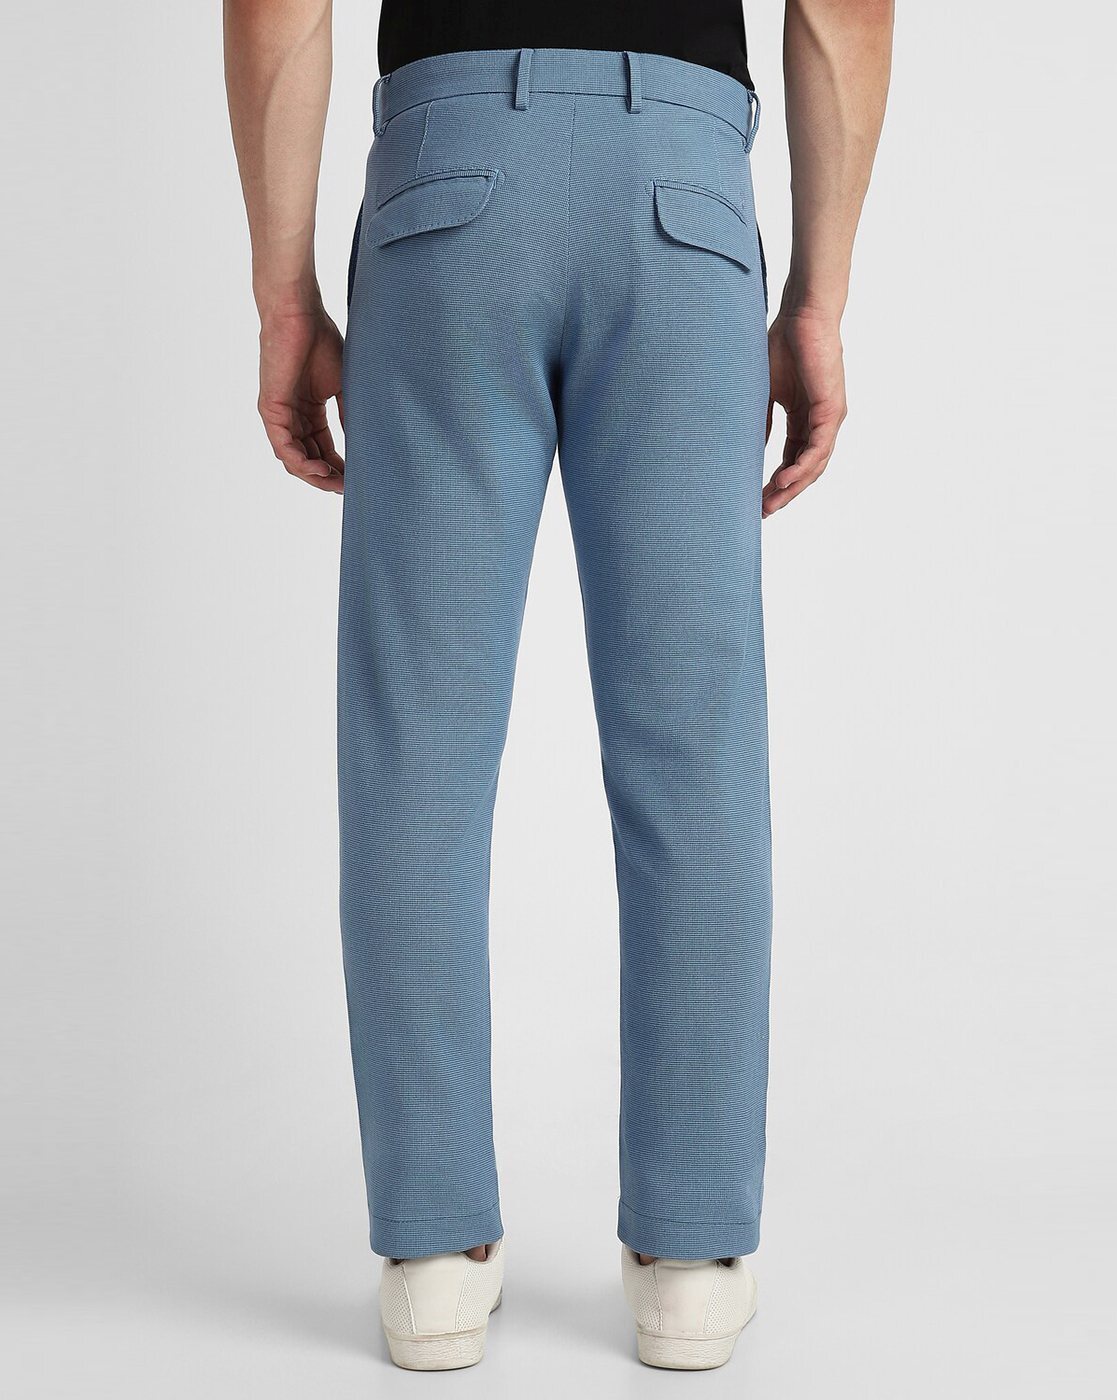 Buy Navy Trousers & Pants for Men by ALLEN SOLLY Online | Ajio.com